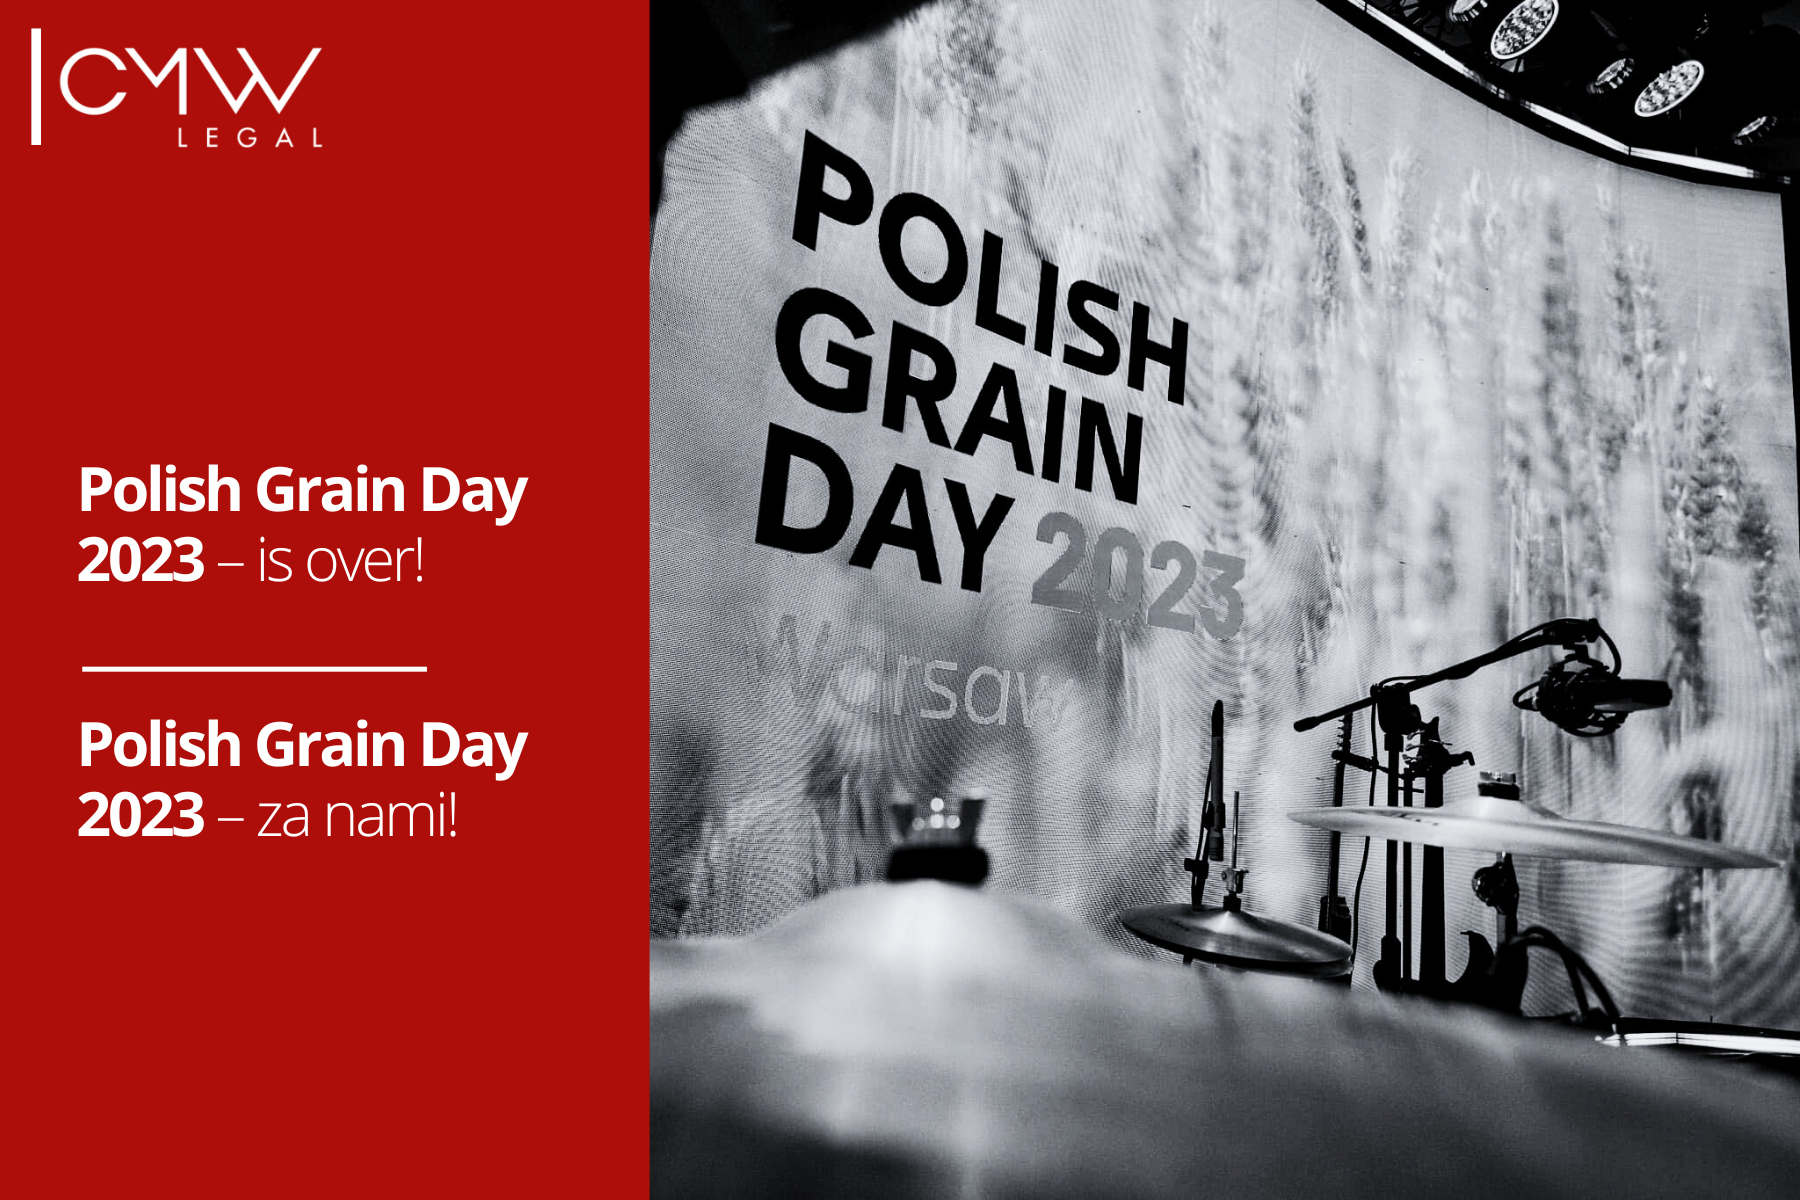  Polish Grain Day 2023 – Warszawa, 25-26 maja 2023 r.